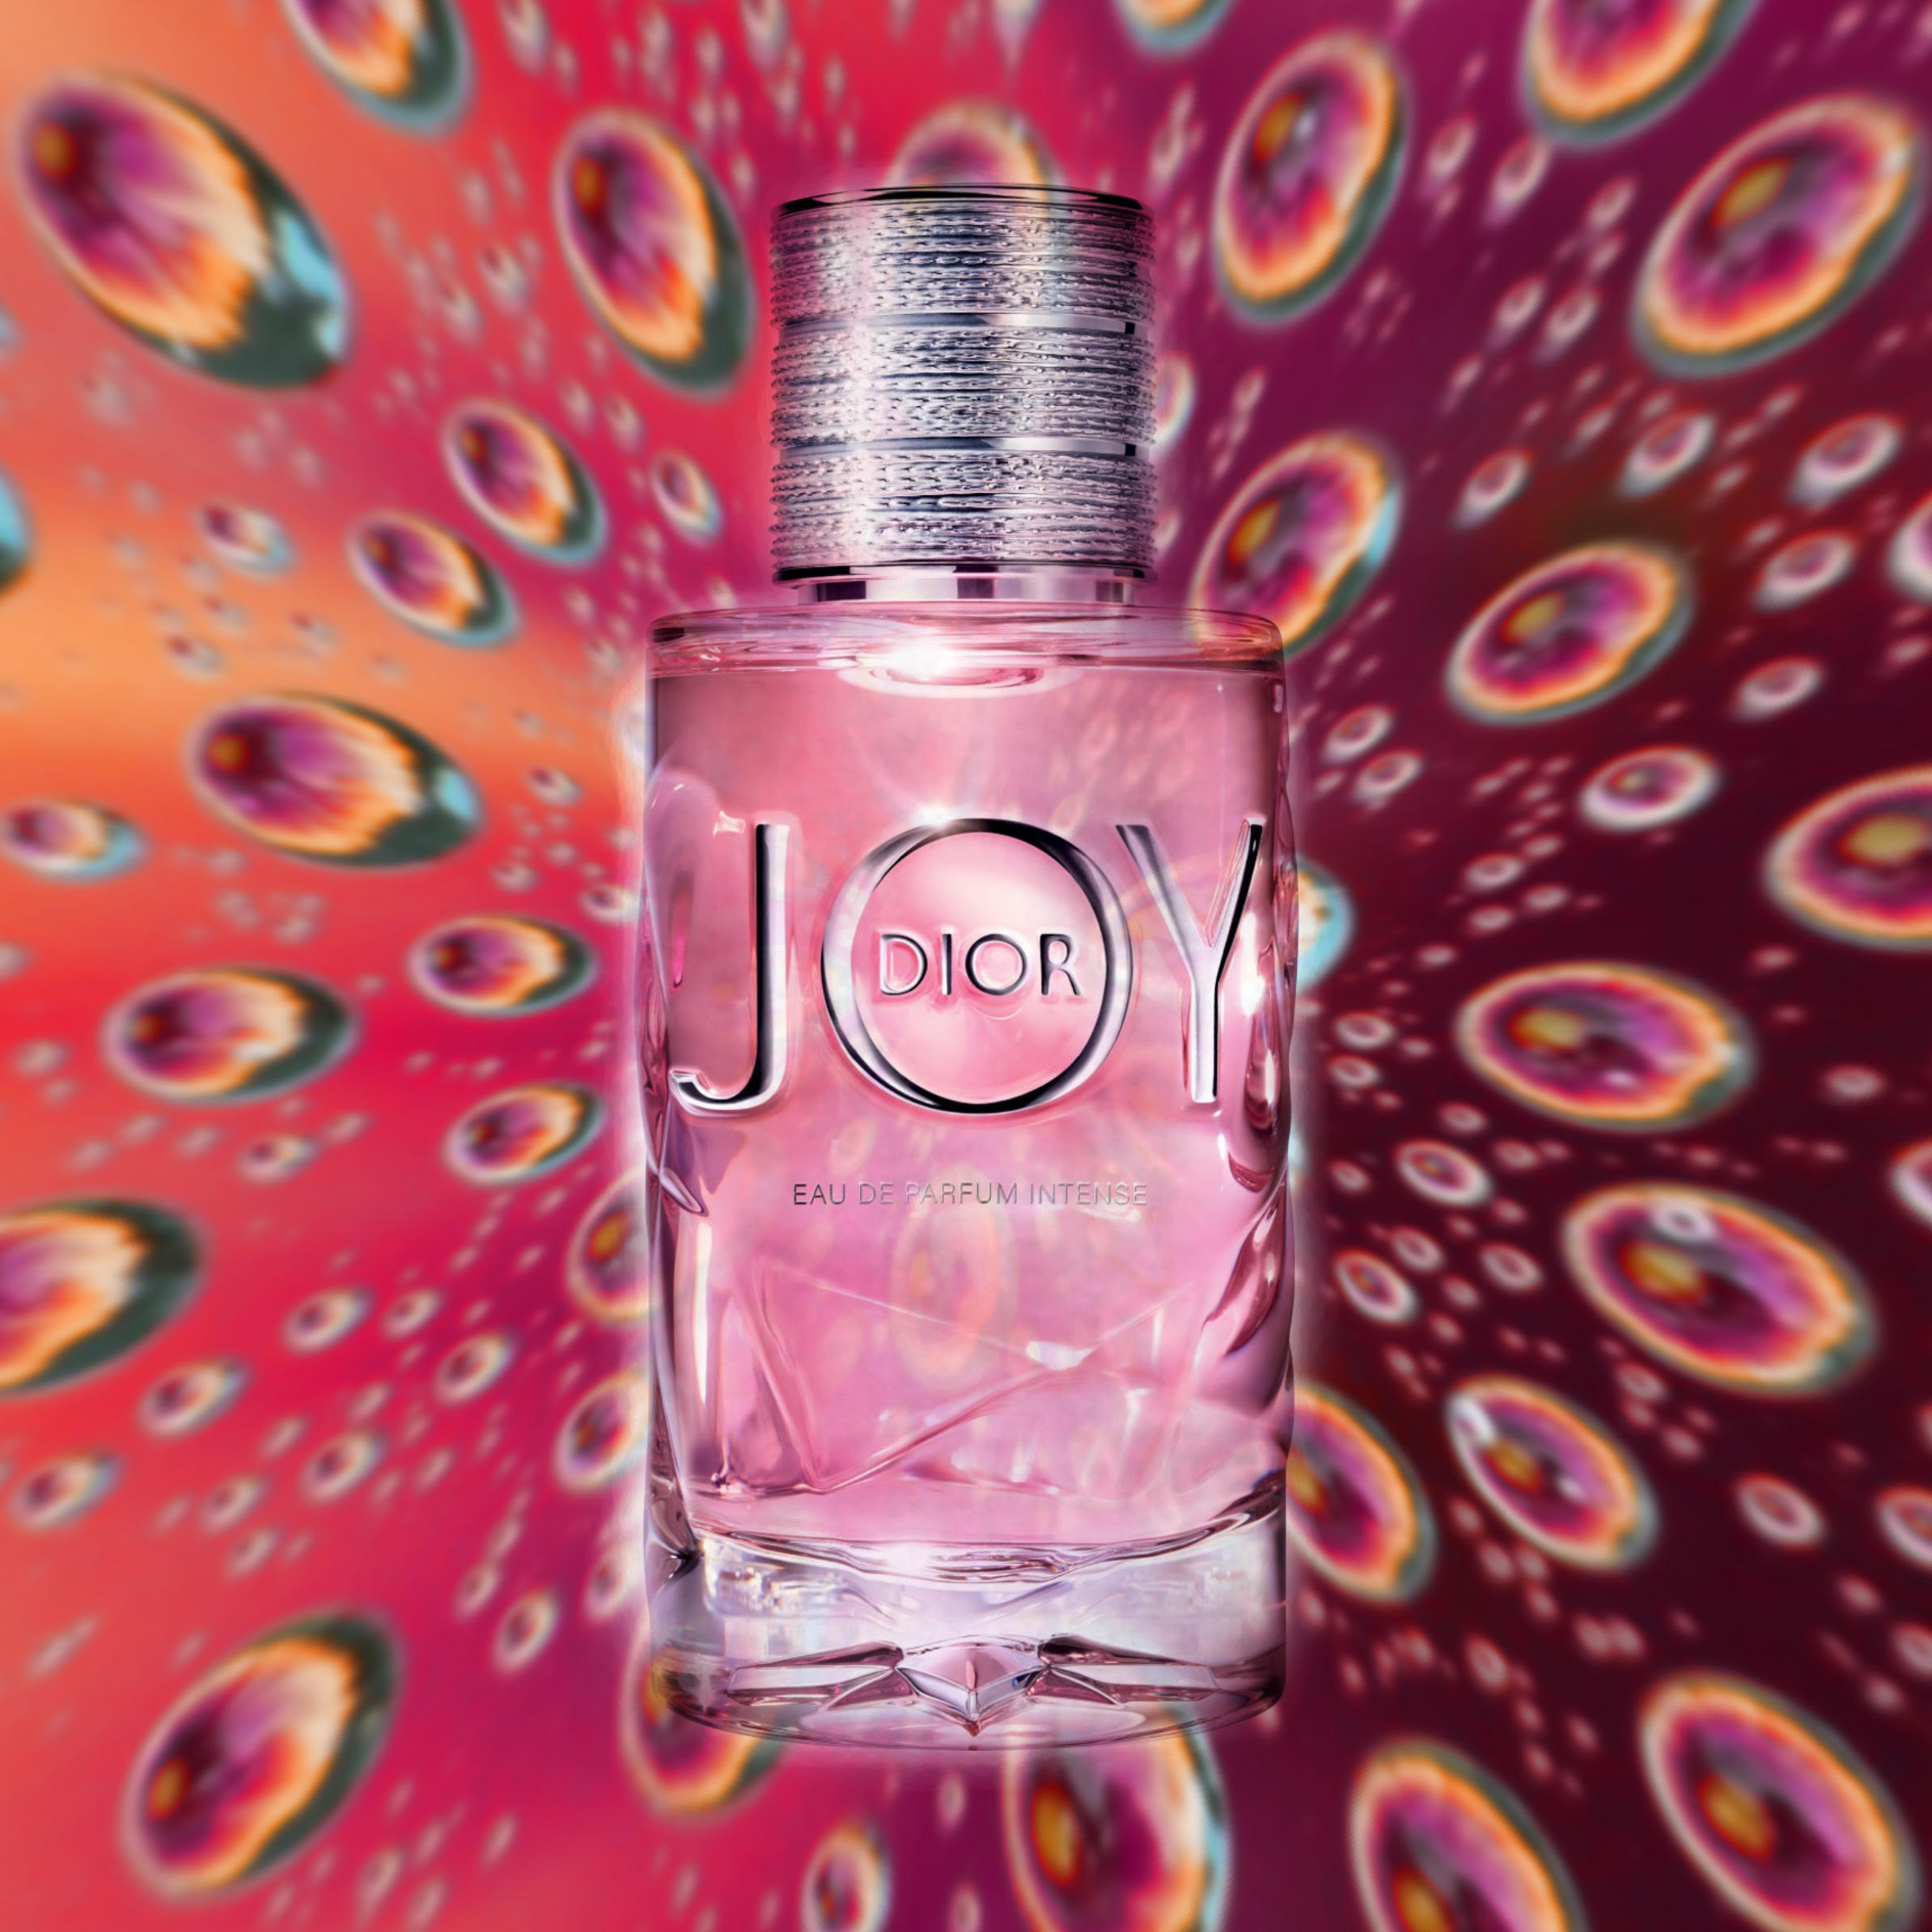 Dior Joy Intense Review - François 